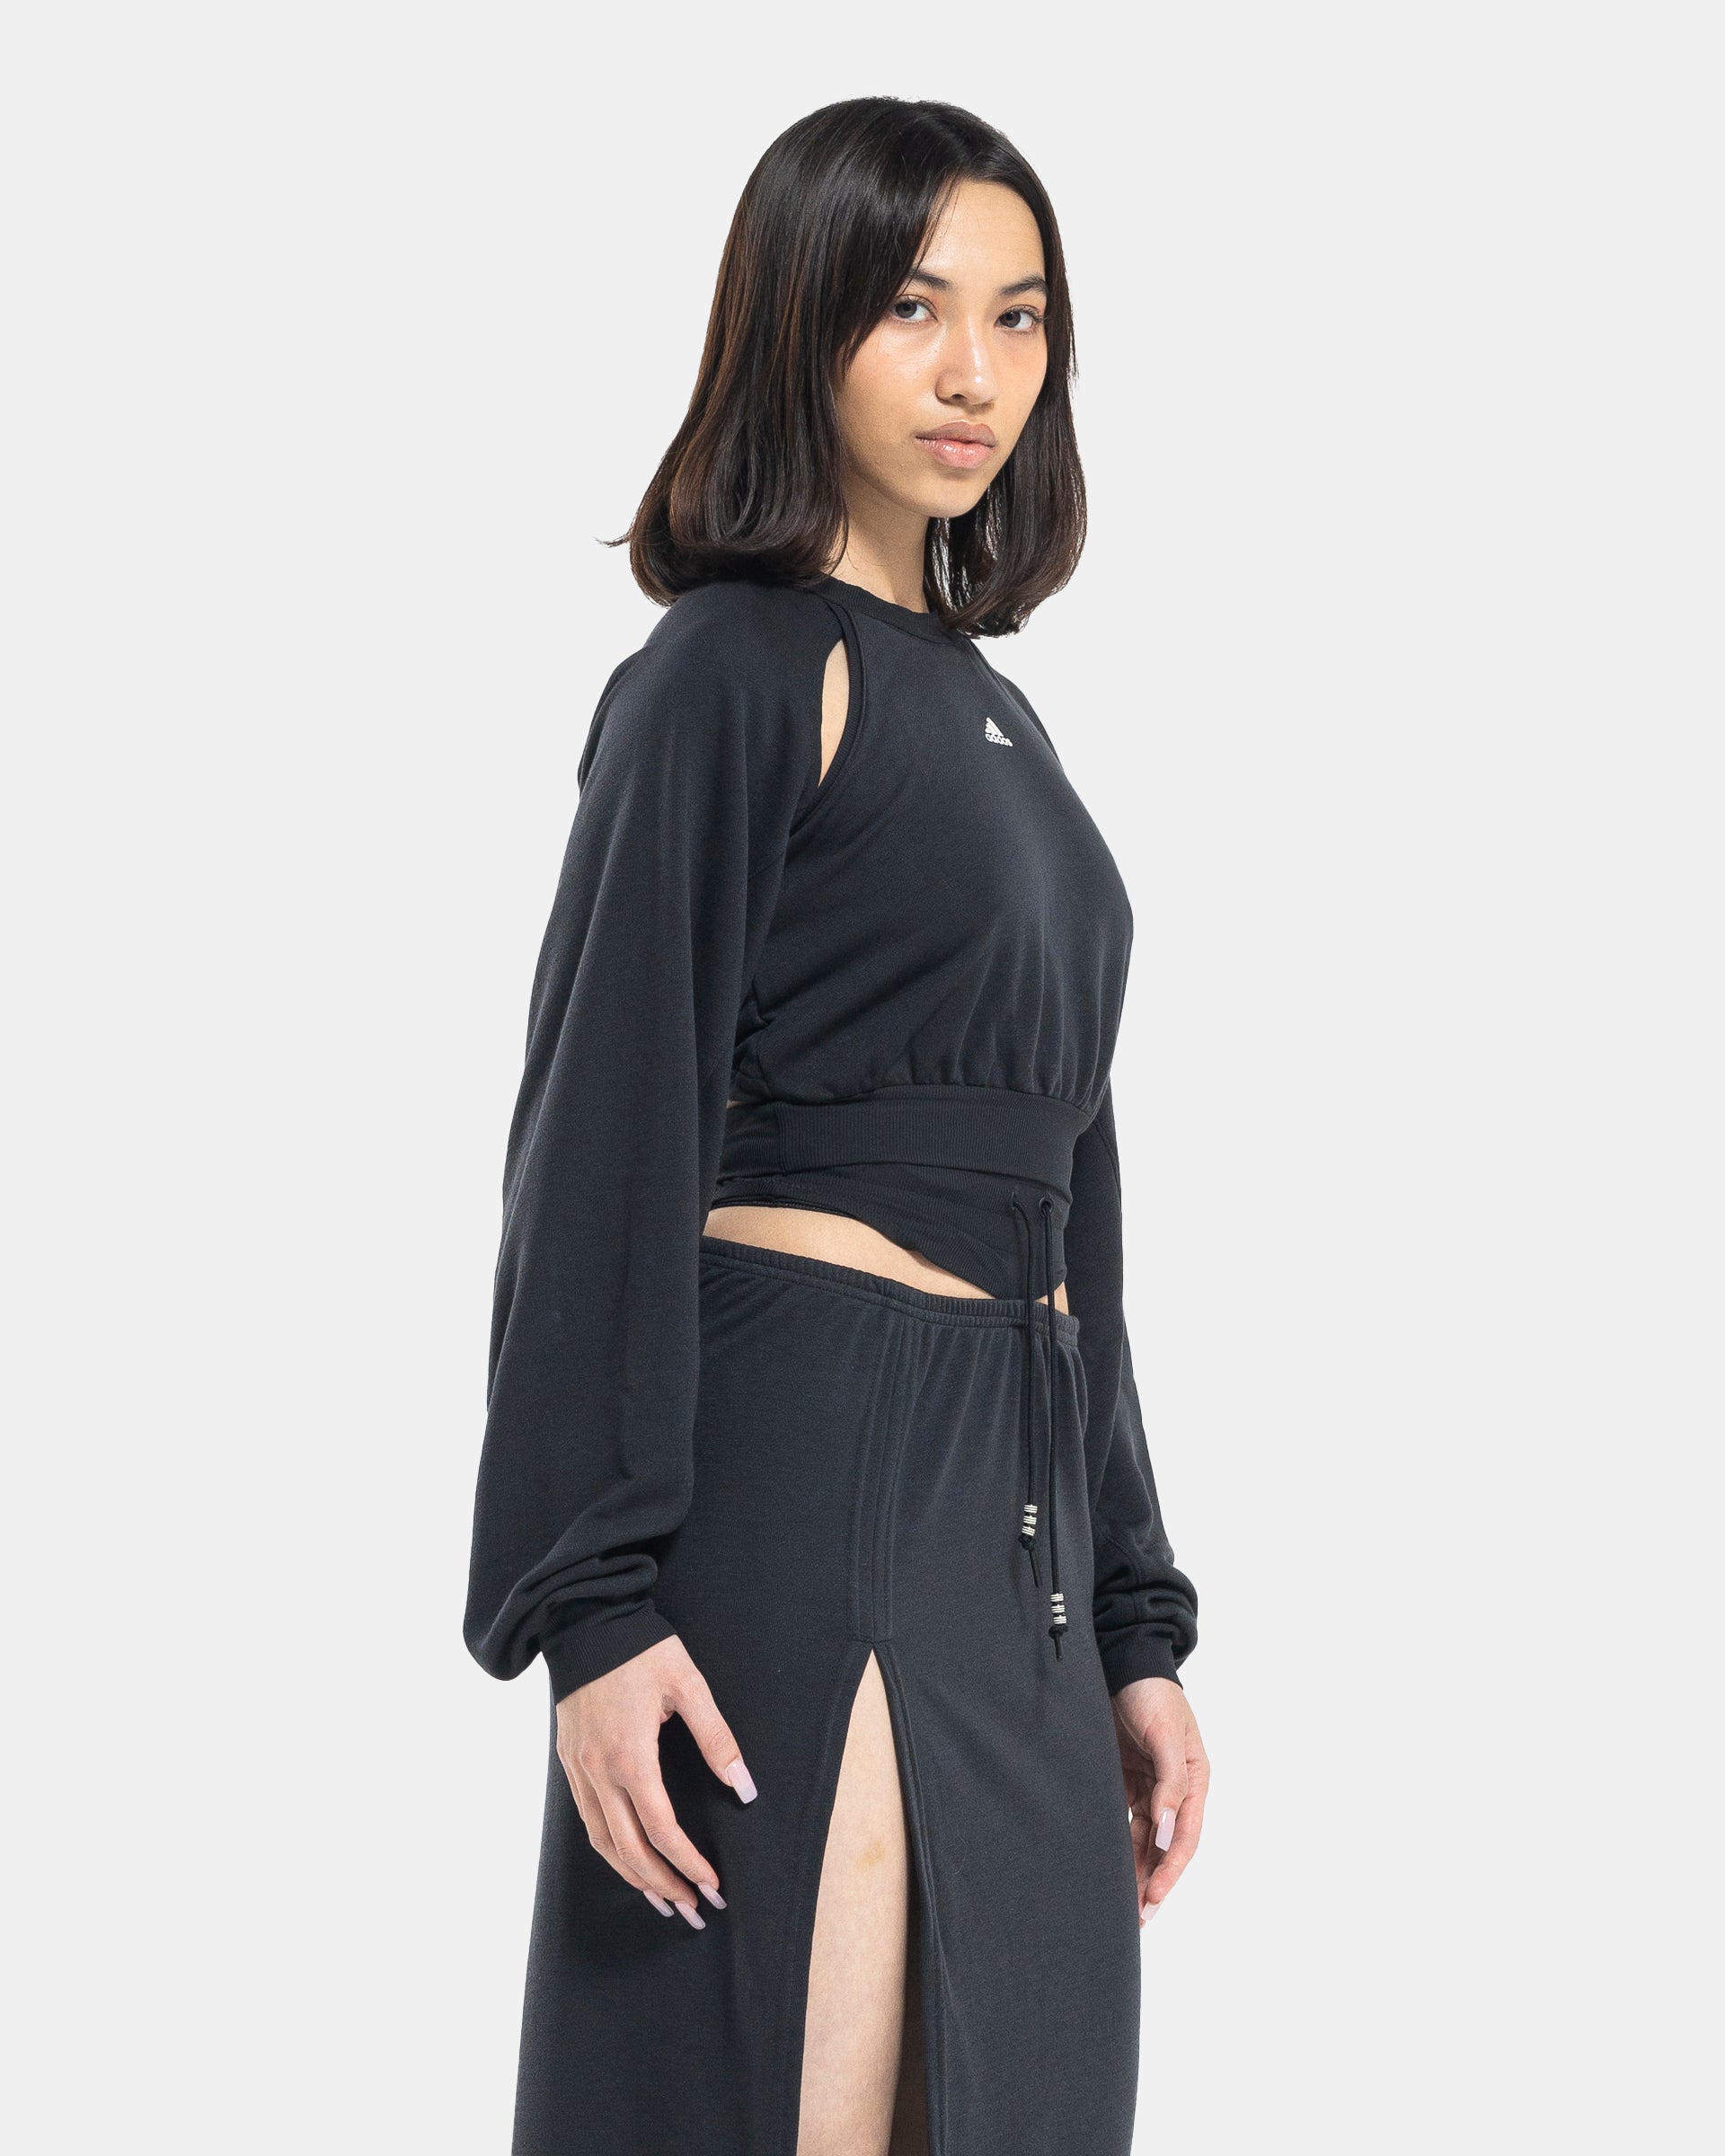 Female model wearing RUI x Adidas Black Sweatshirt on white background